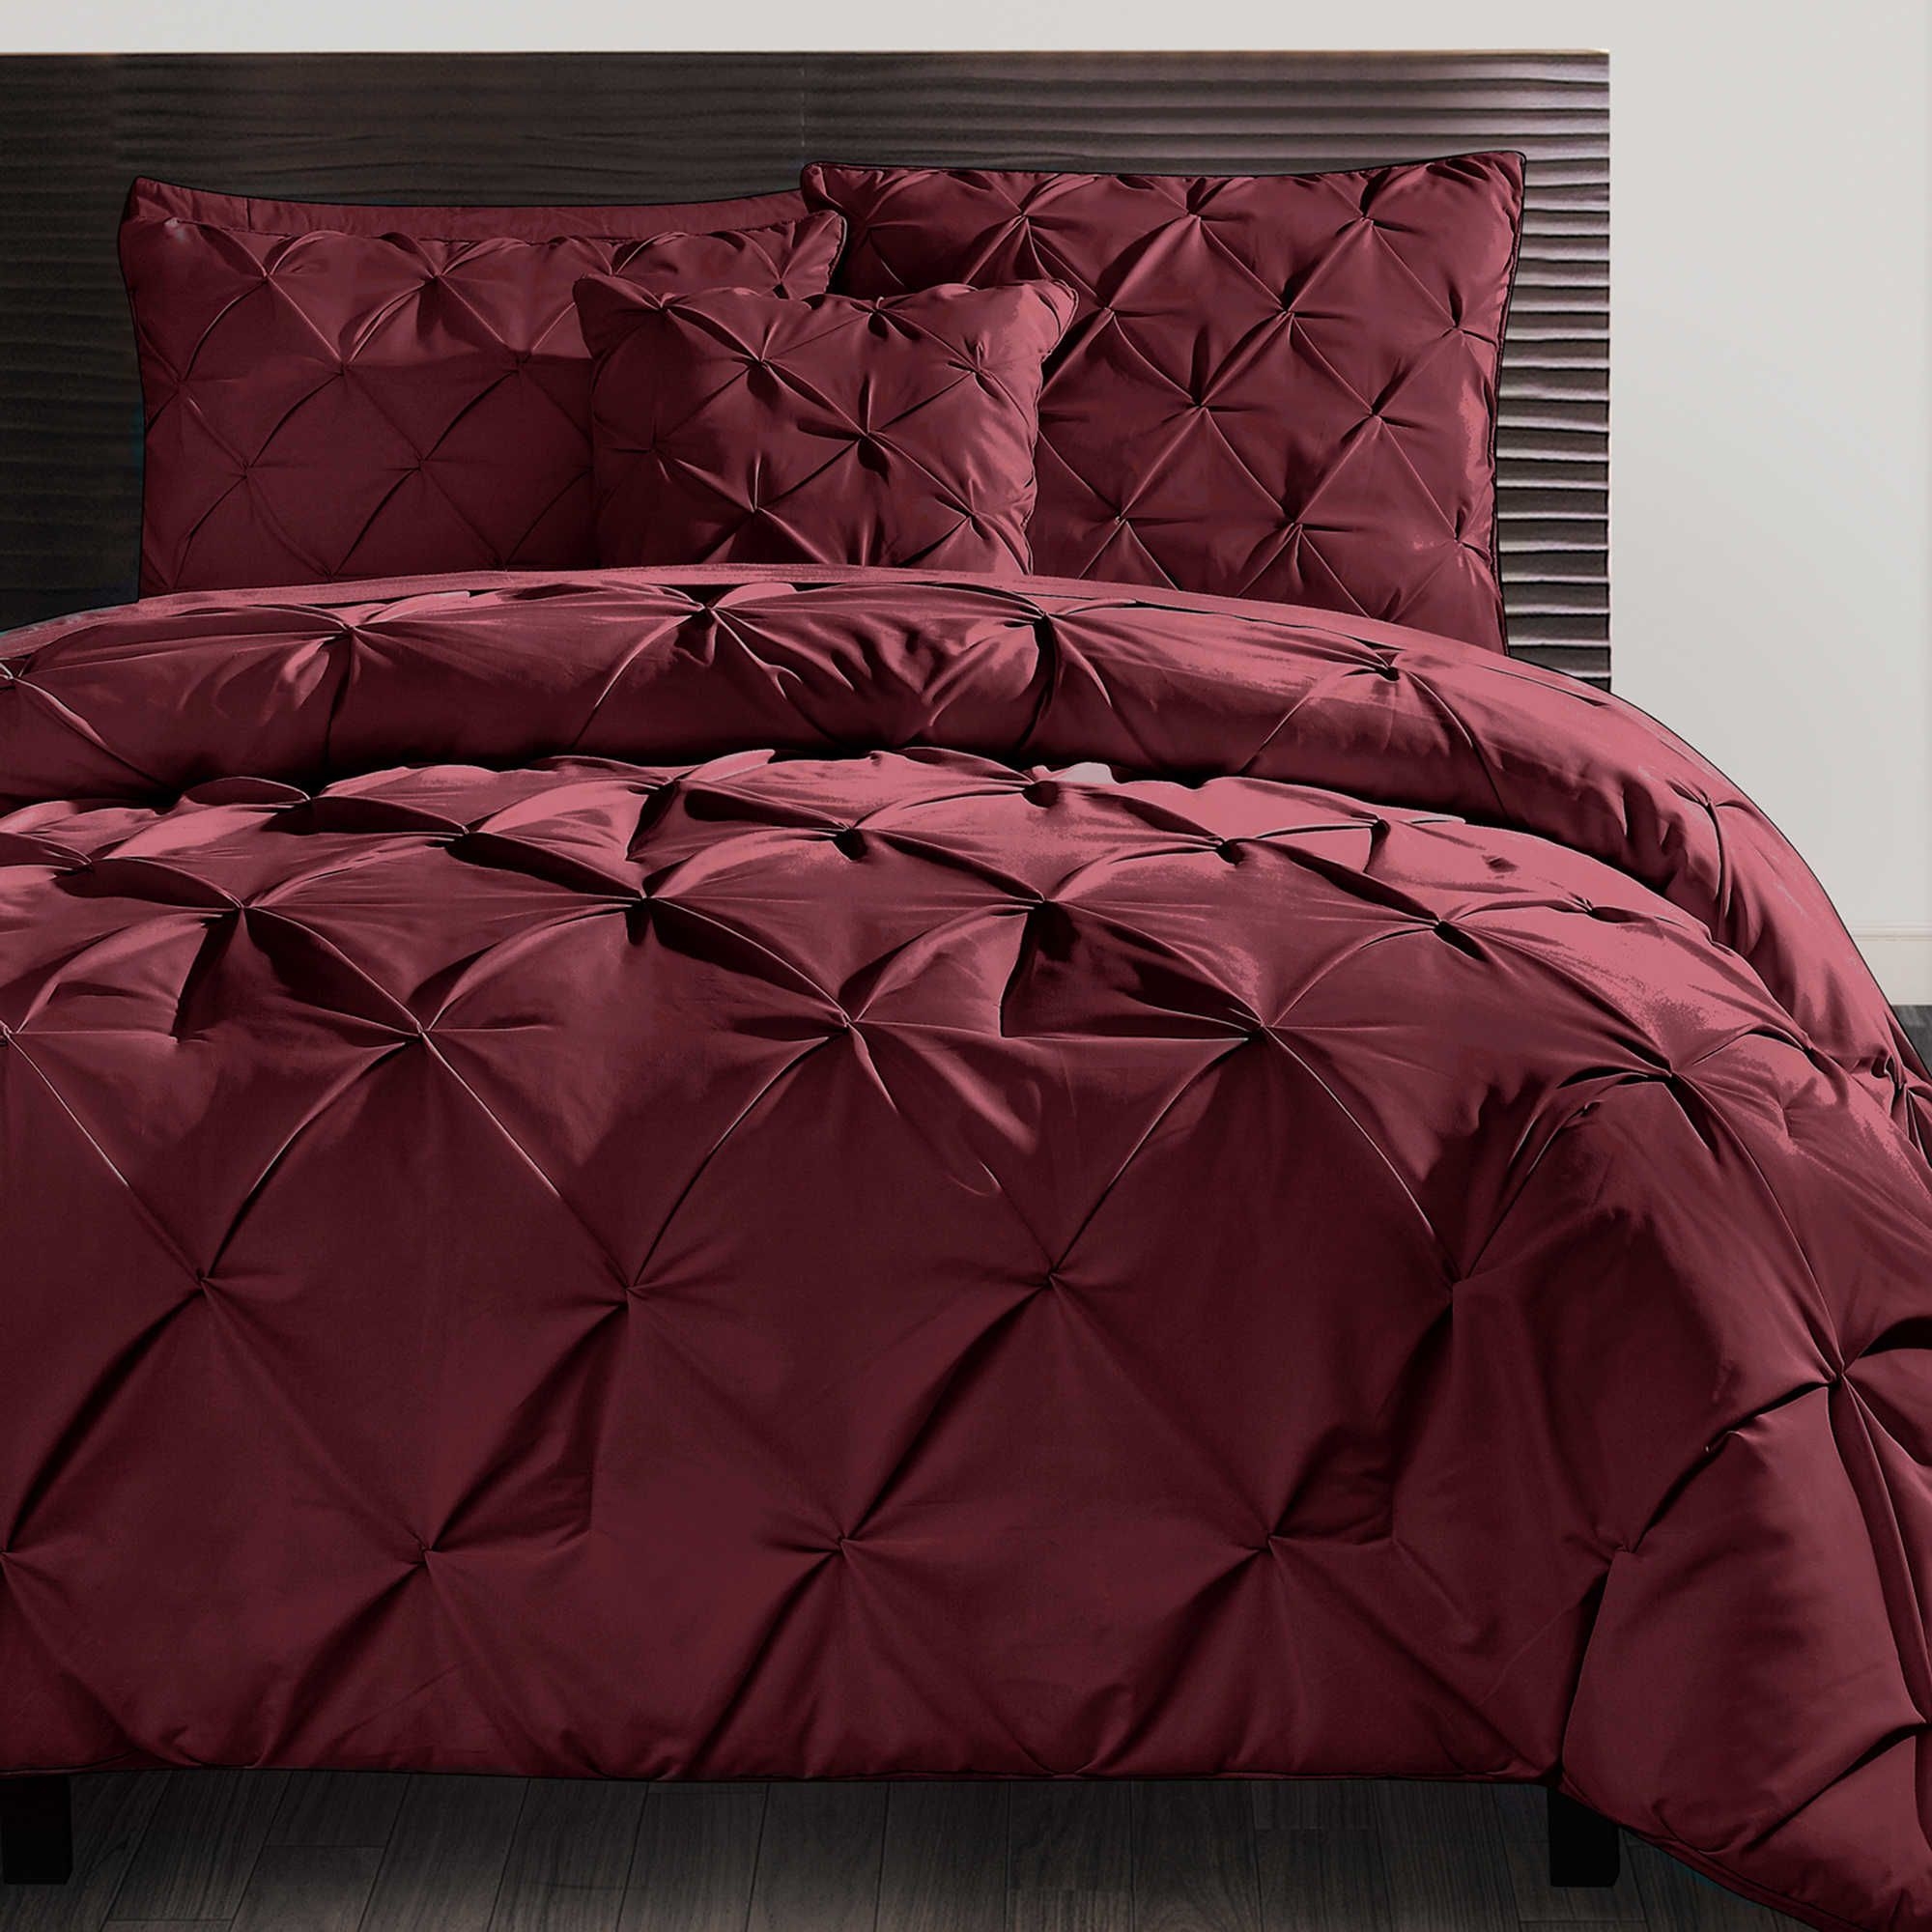 Beautiful Modern Textured Chocolate Brown Comforter Set New Queen King Szs